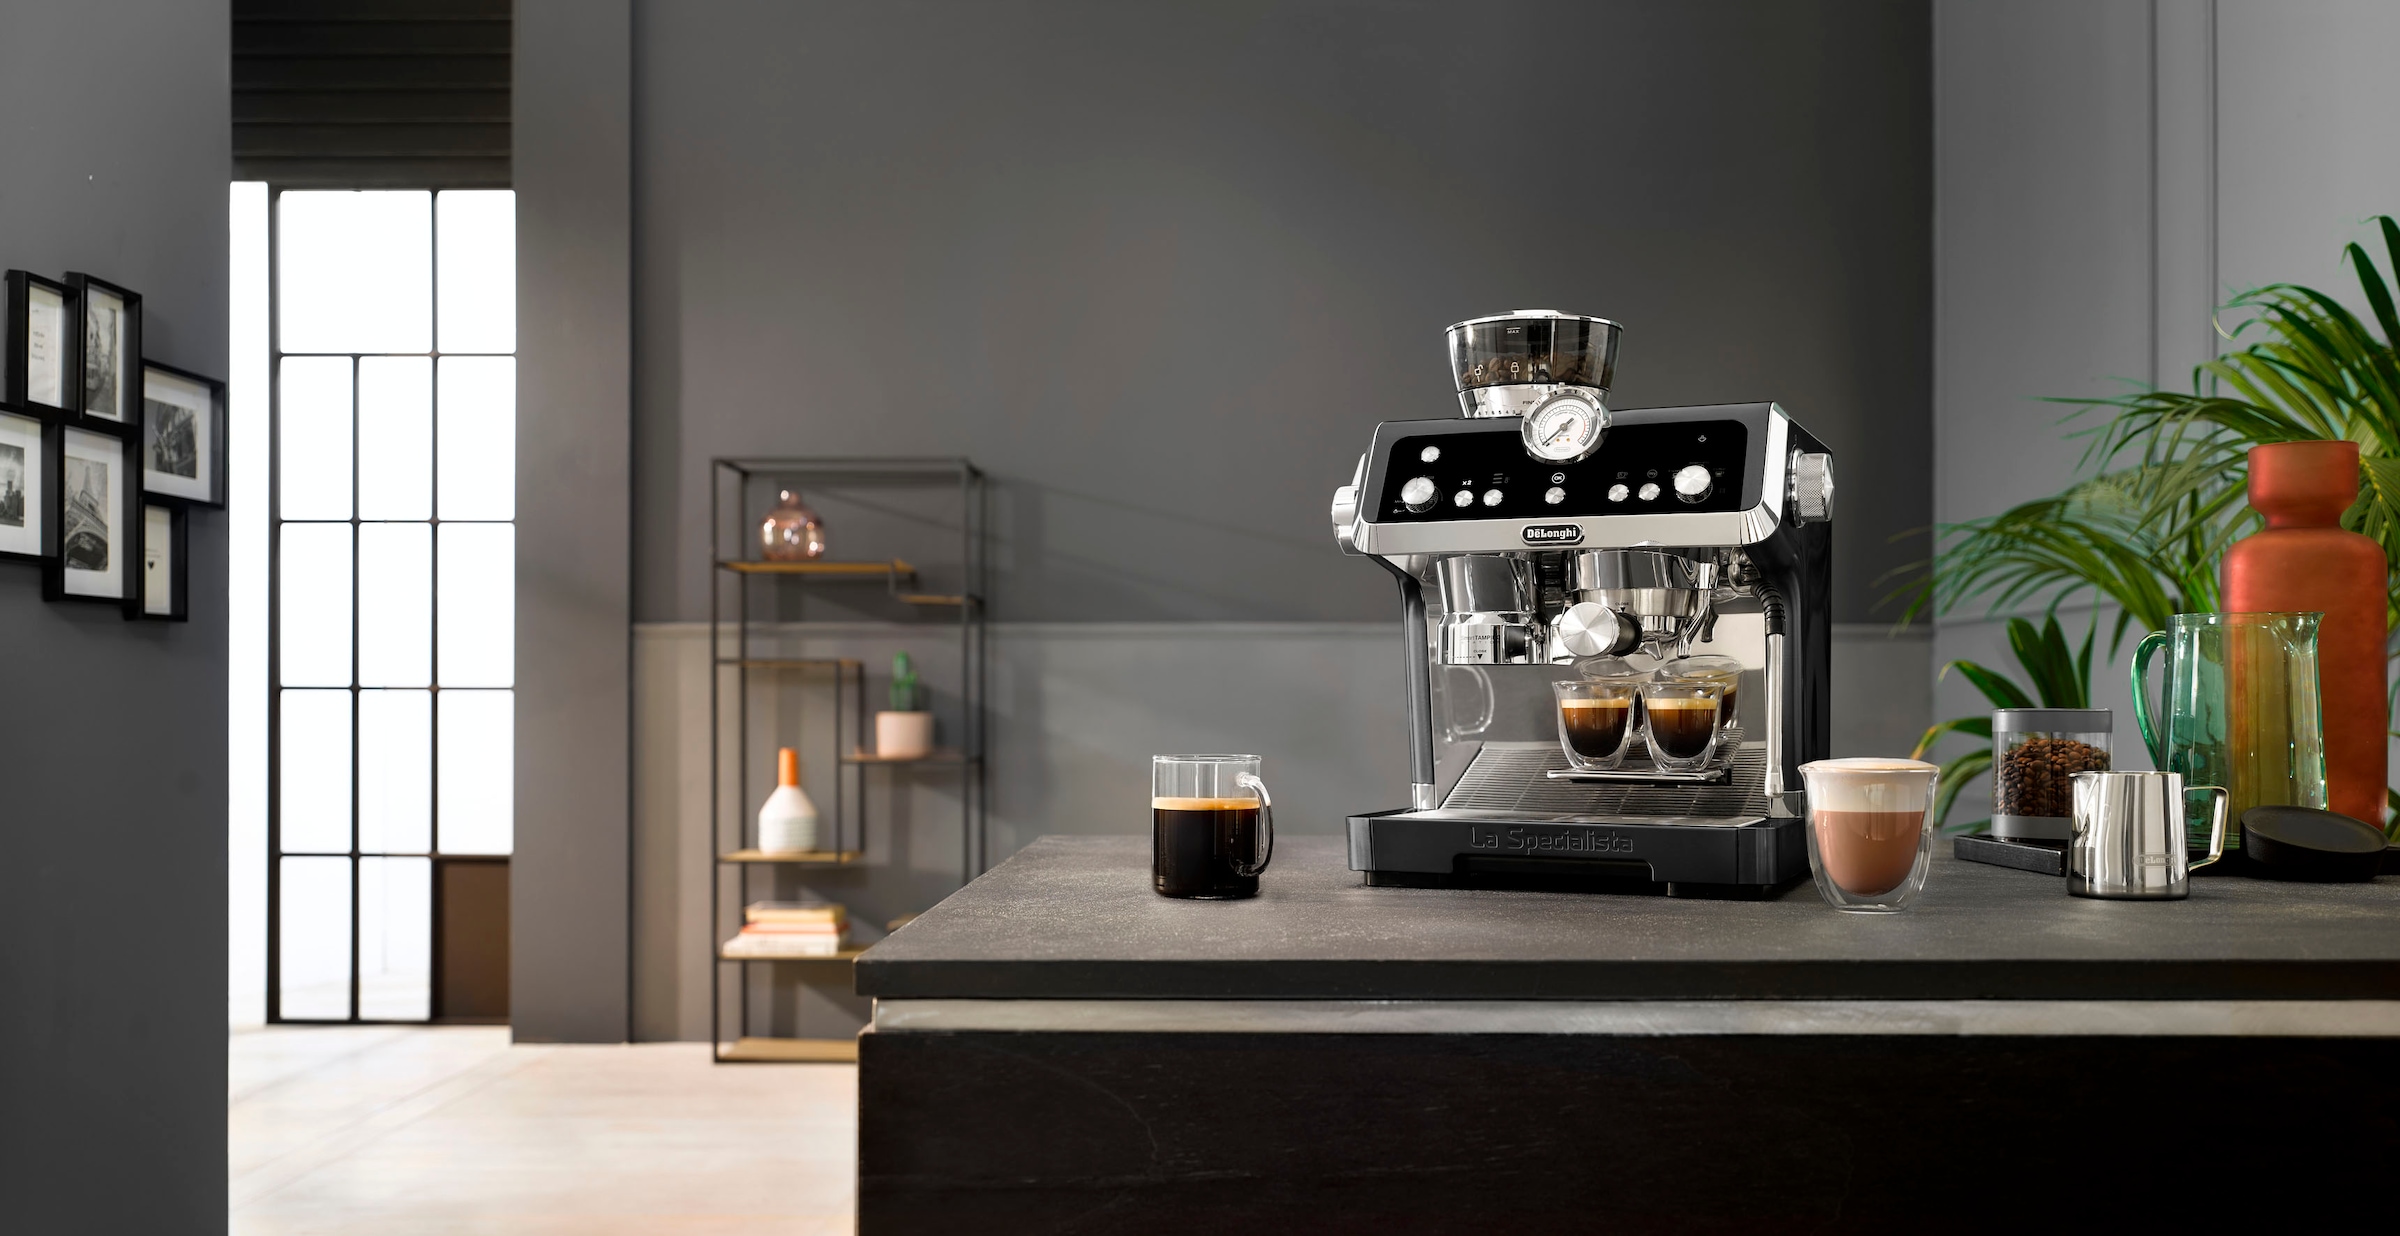 De'Longhi Espressomaschine »La Specialista Prestigio EC9355.BM«, Siebträger, inkl. 250g Kimbo Classic im Wert von UVP € 6,49